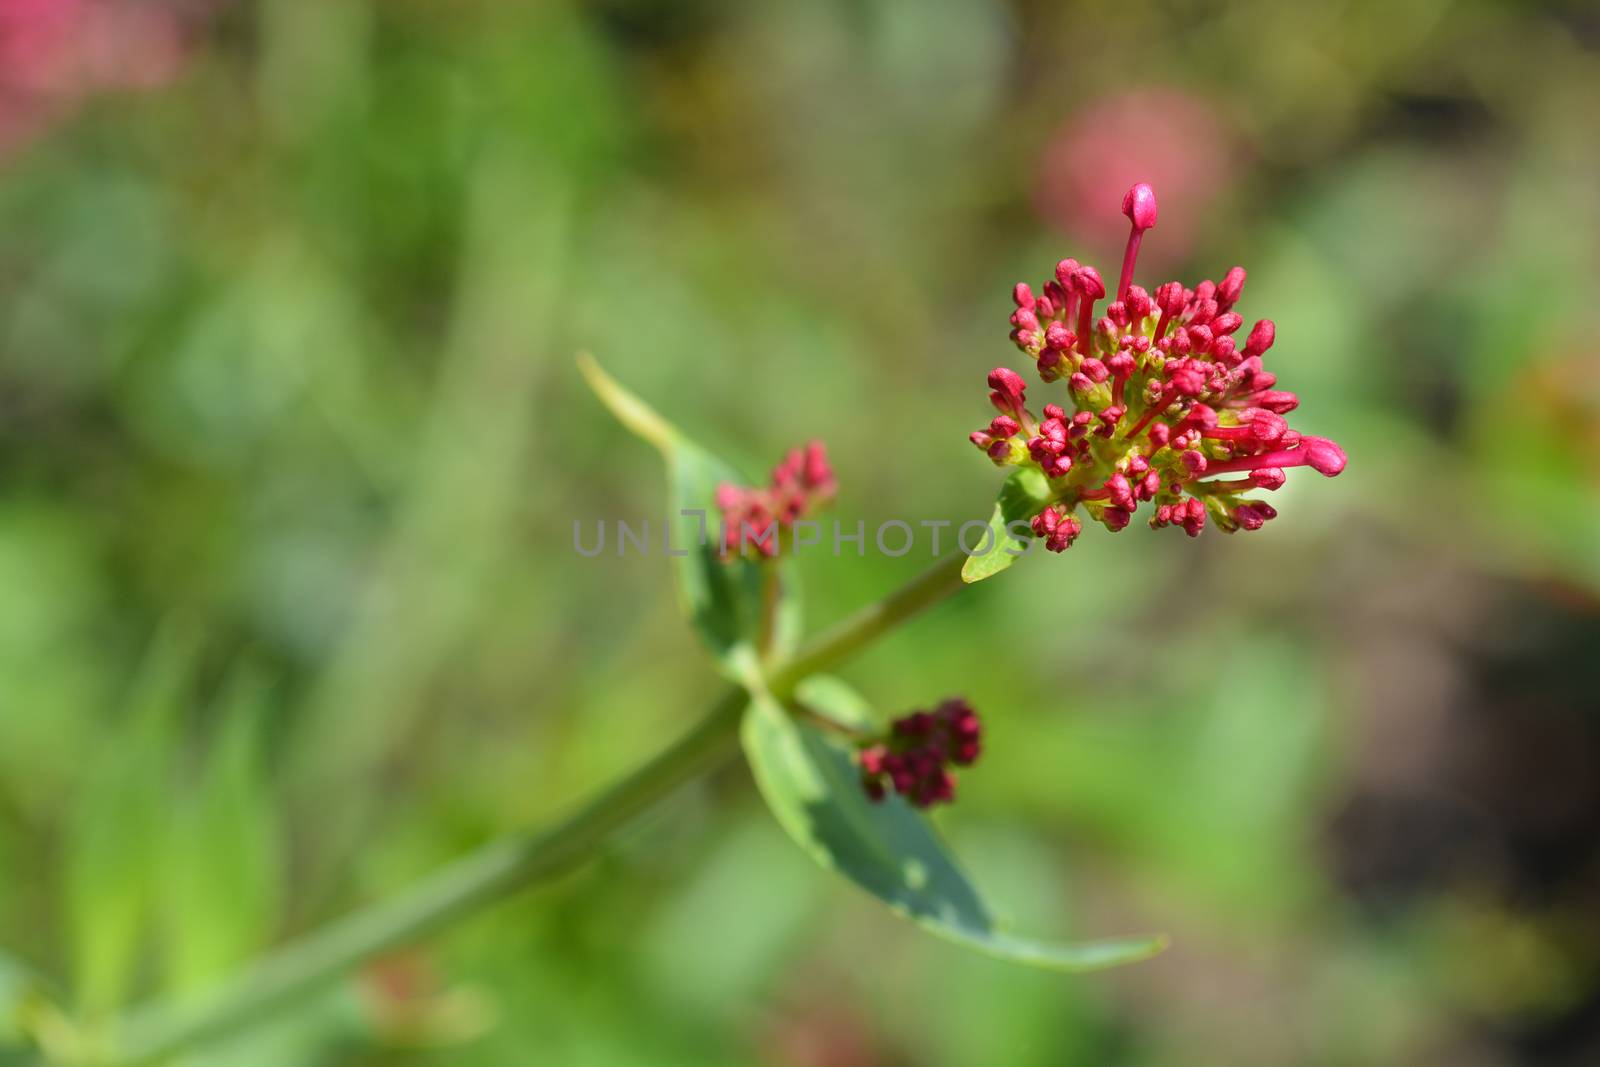 Red valerian flower buds - Latin name - Centranthus ruber